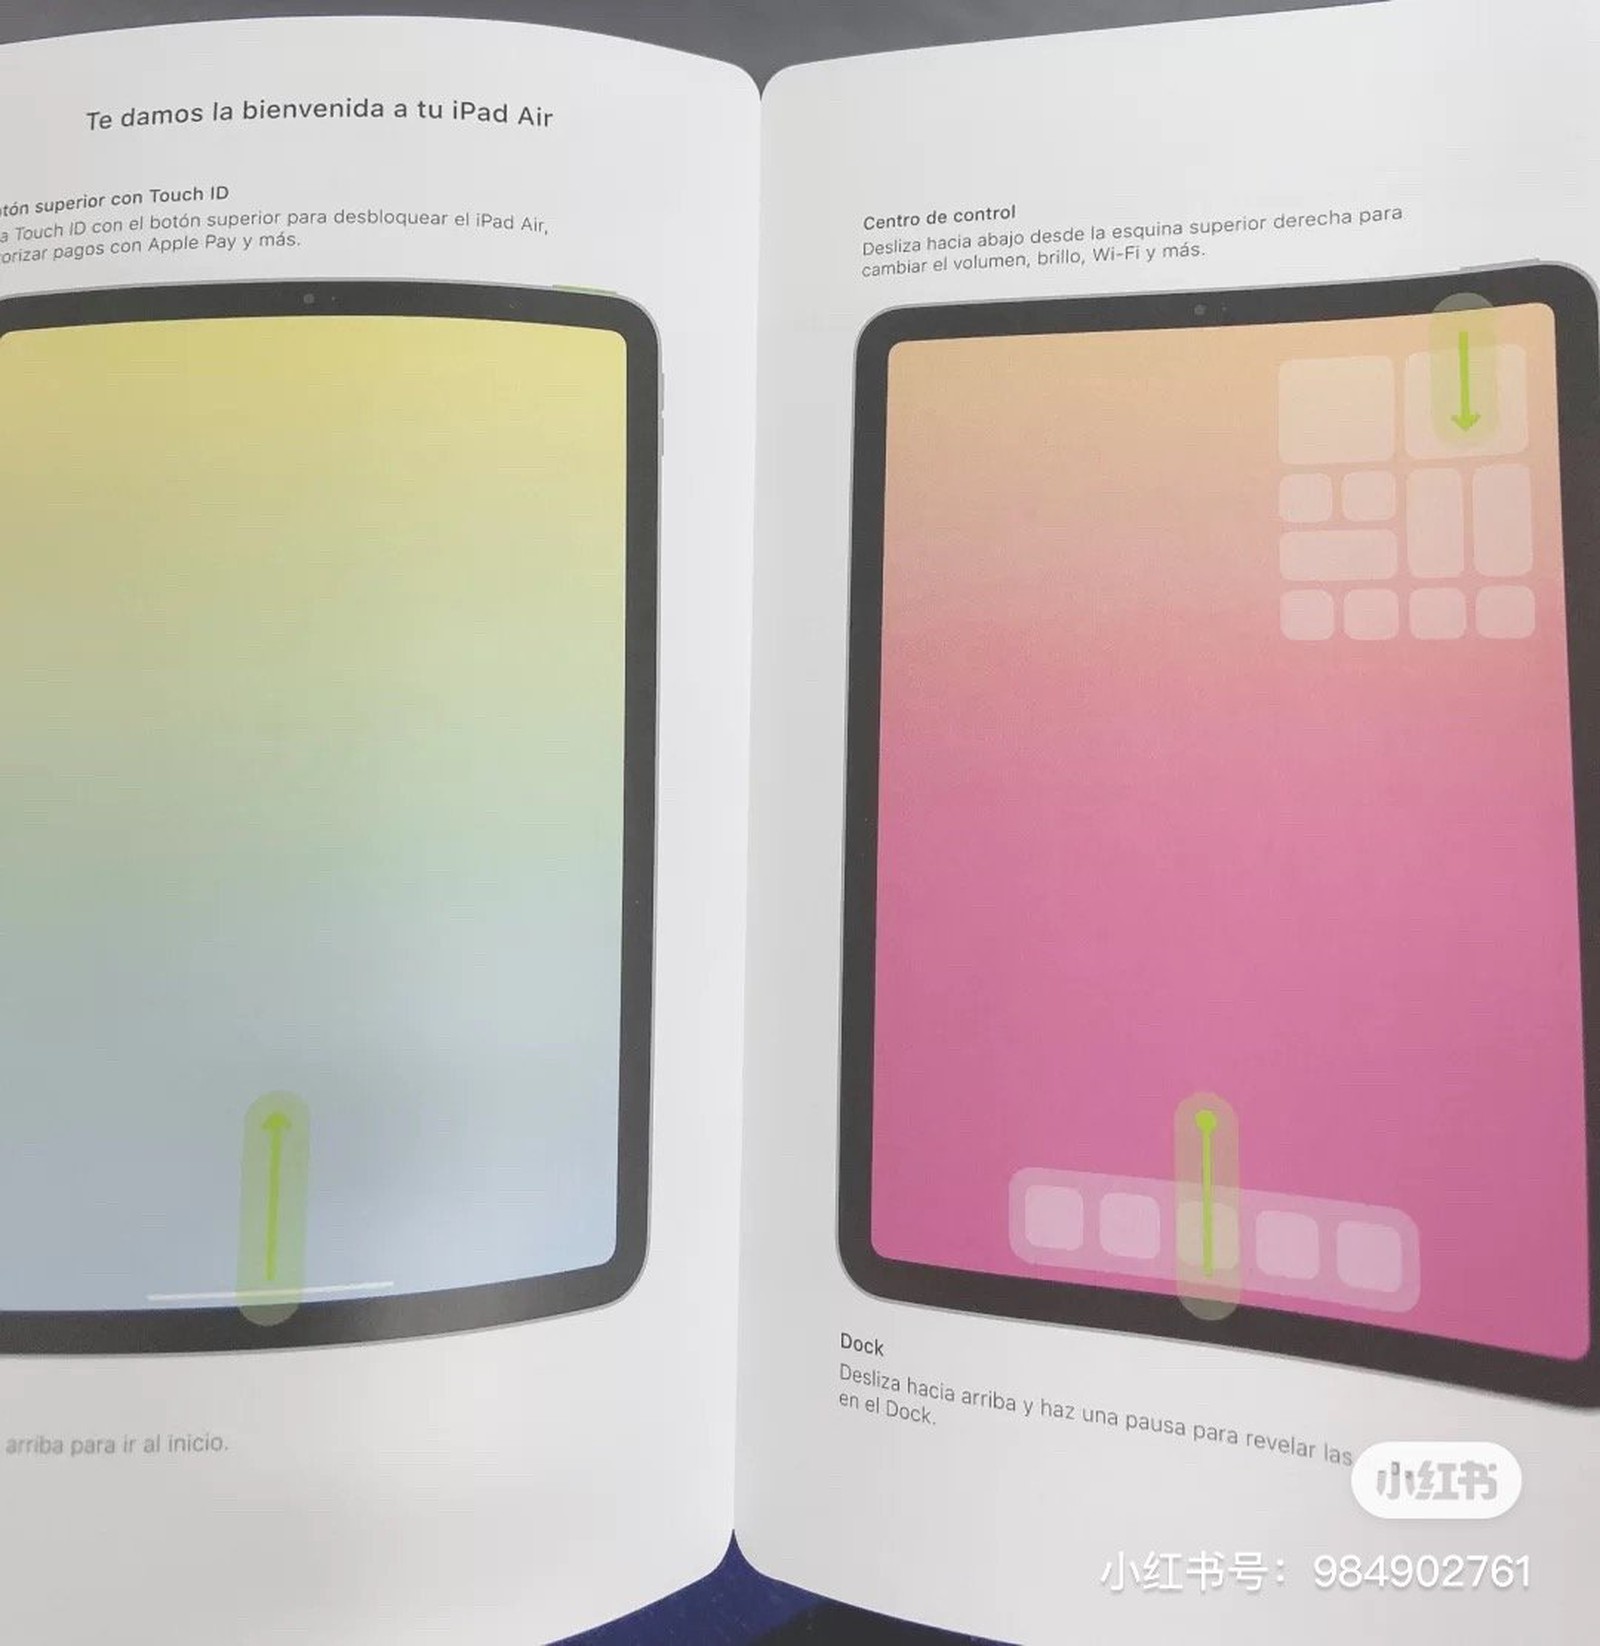 Manual del iPad Air filtrado